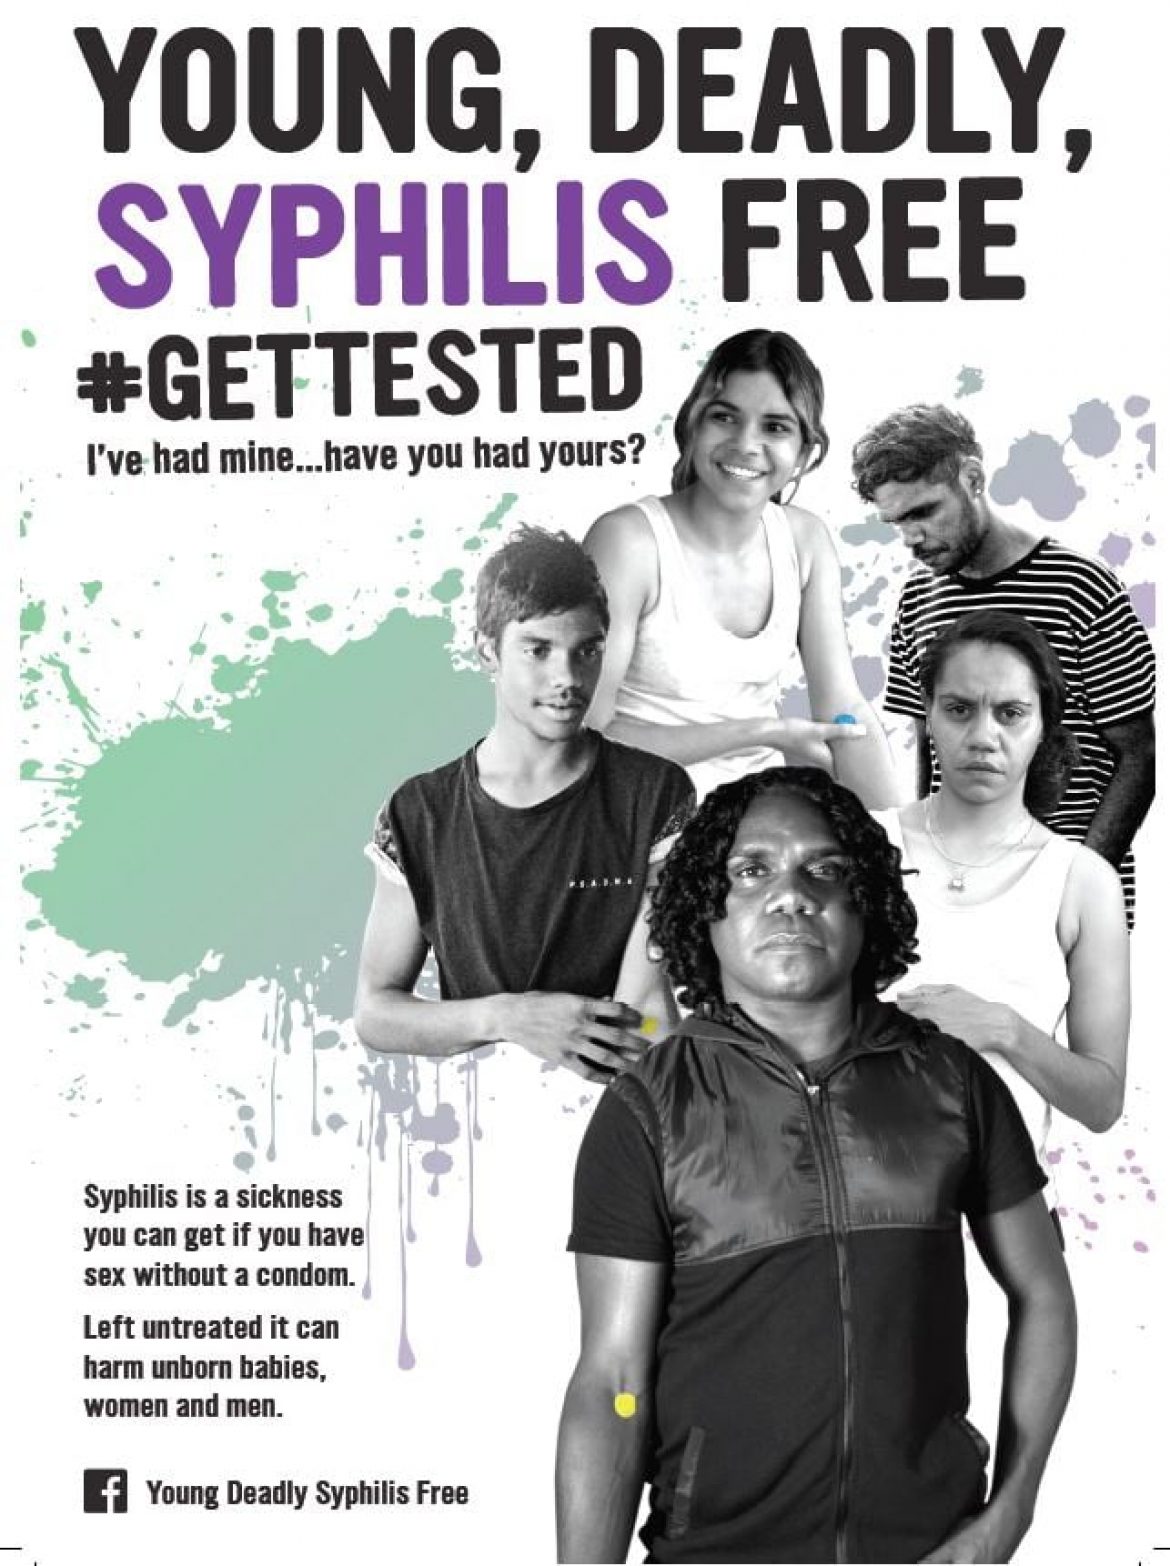 Health authorities declare syphilis outbreak has spread to Adelaide